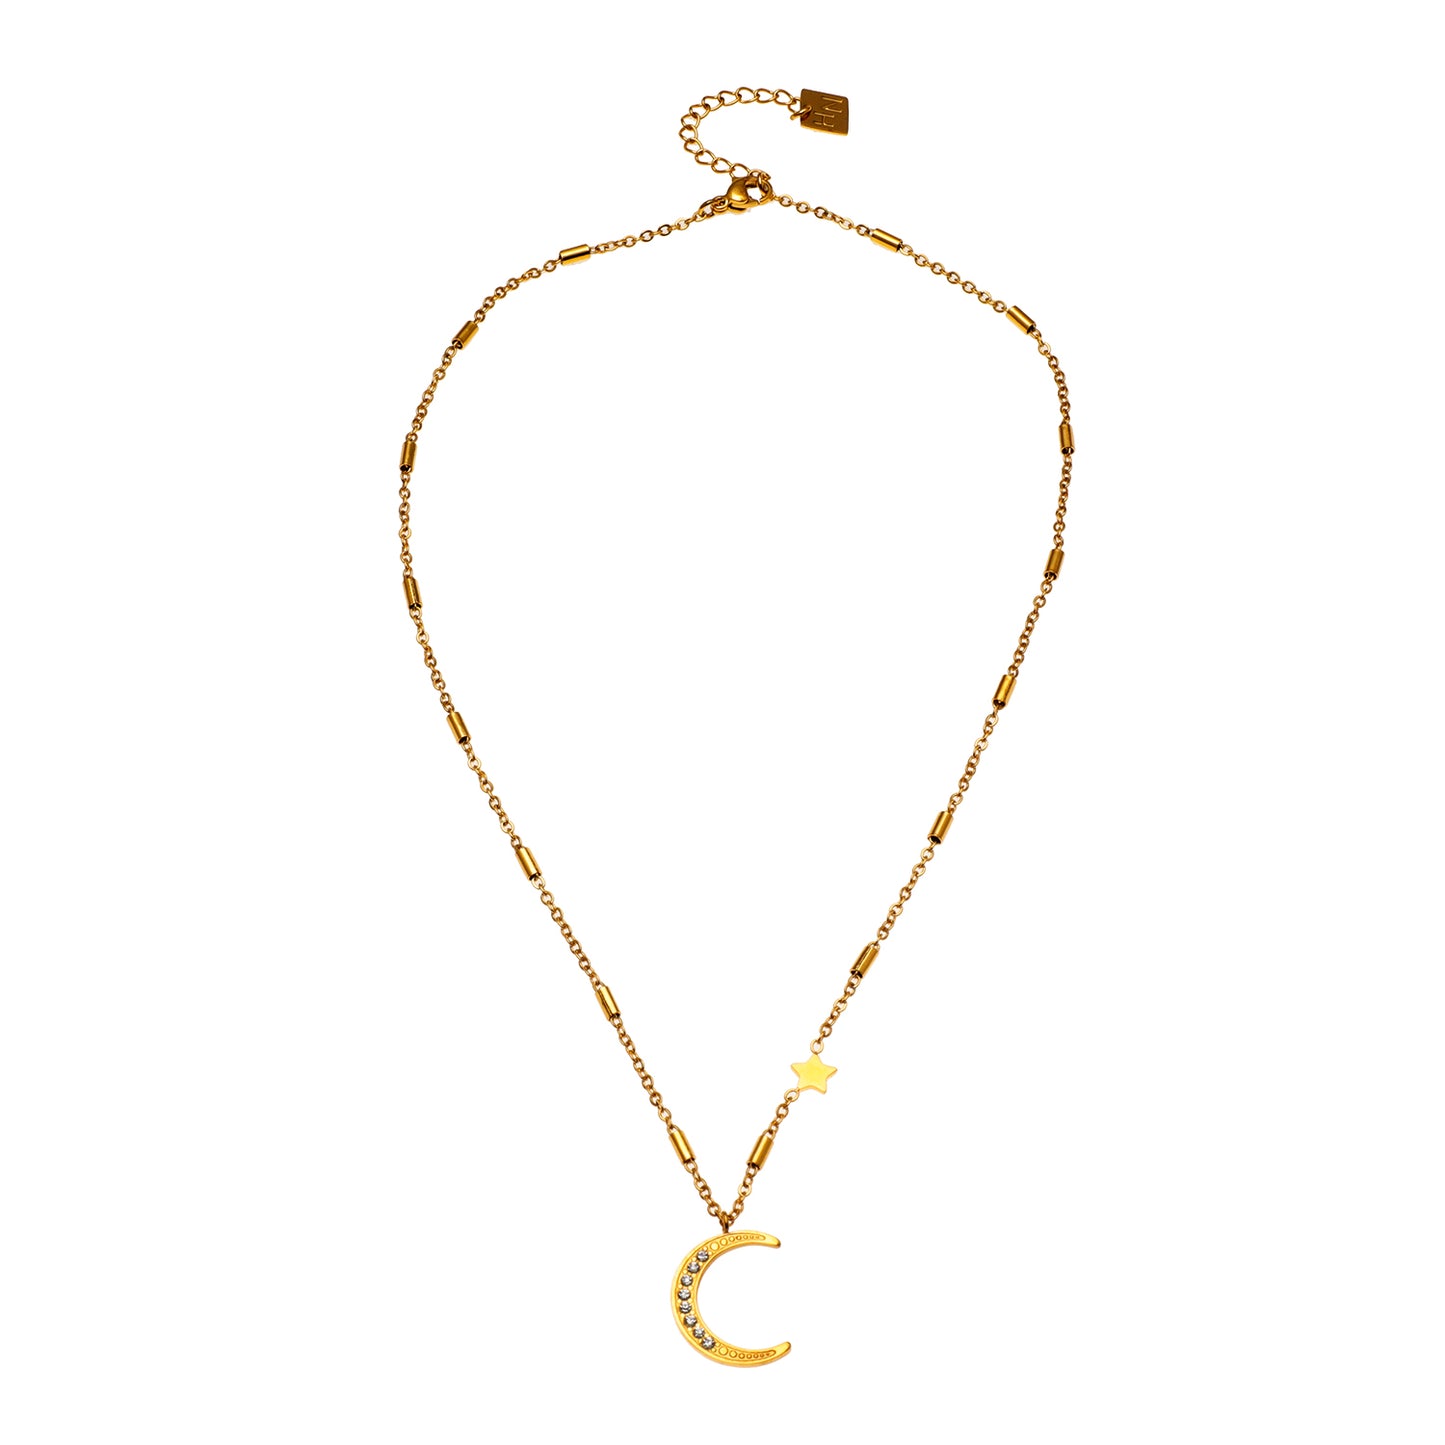 ALMERIA: Celestial Magic - Zirconia Embeded Crescent Moon and Star Necklace